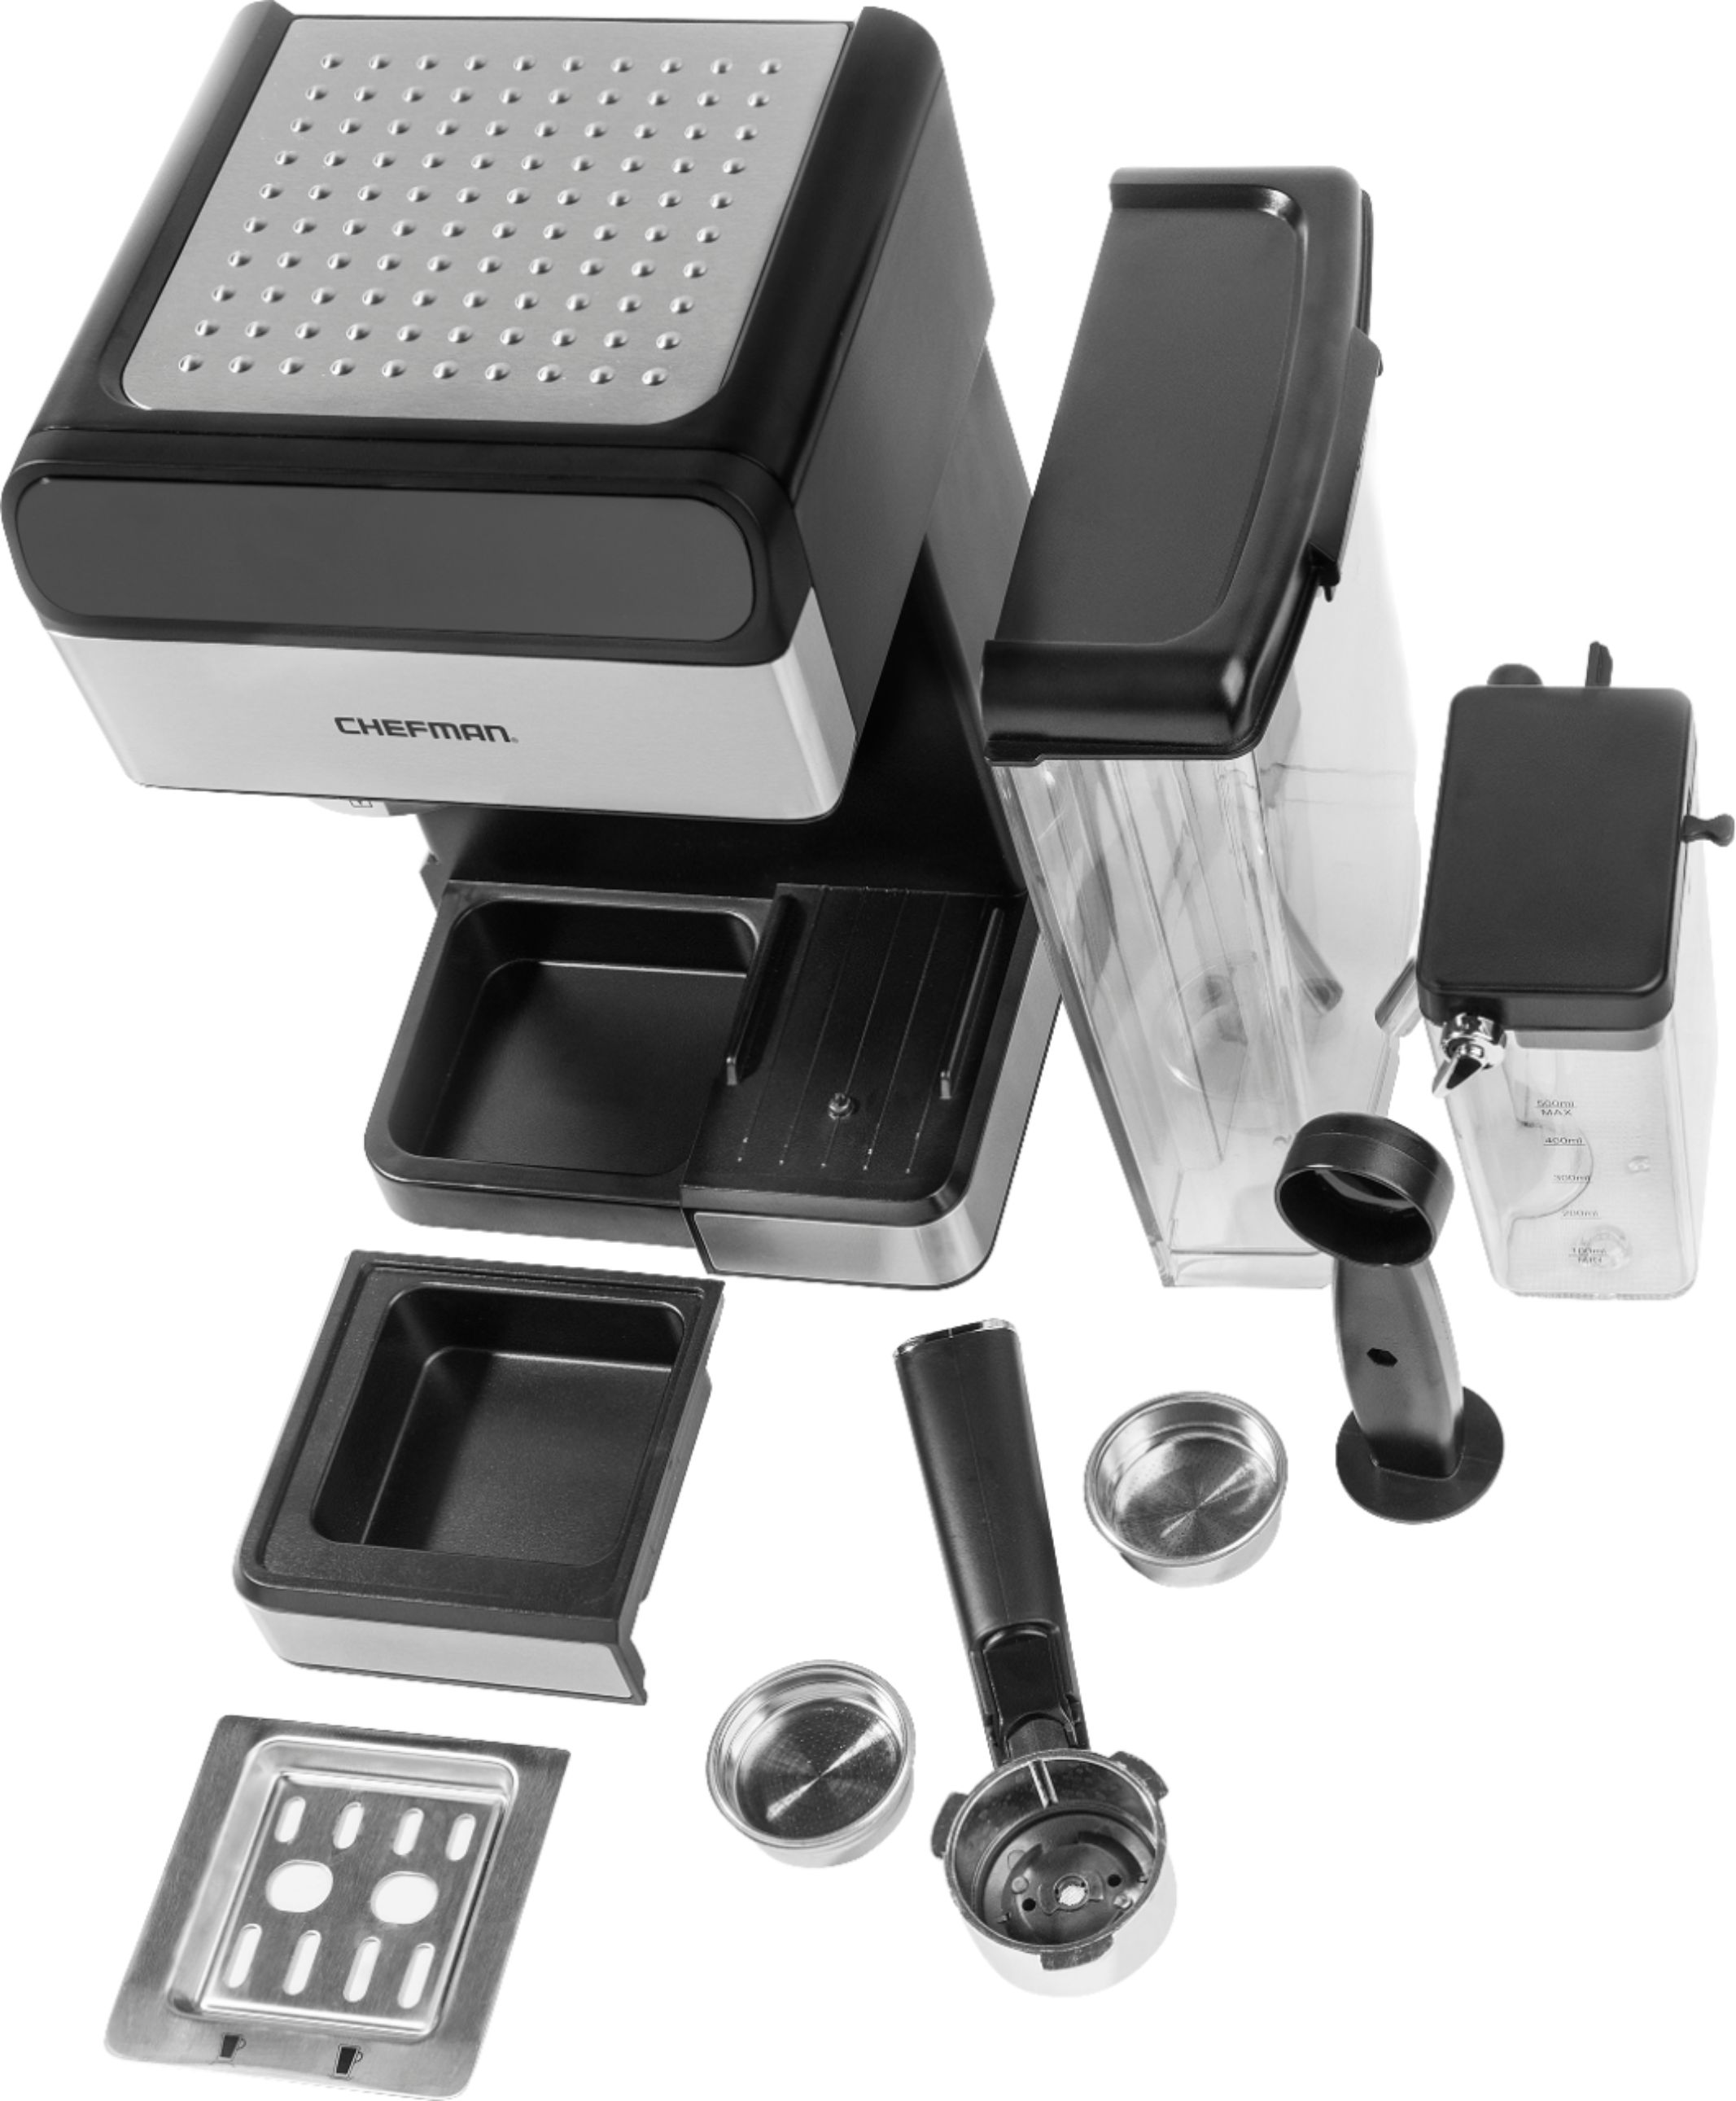 Portafilter Set for 19-Bar EspressoWorks Machine - Replacement Parts